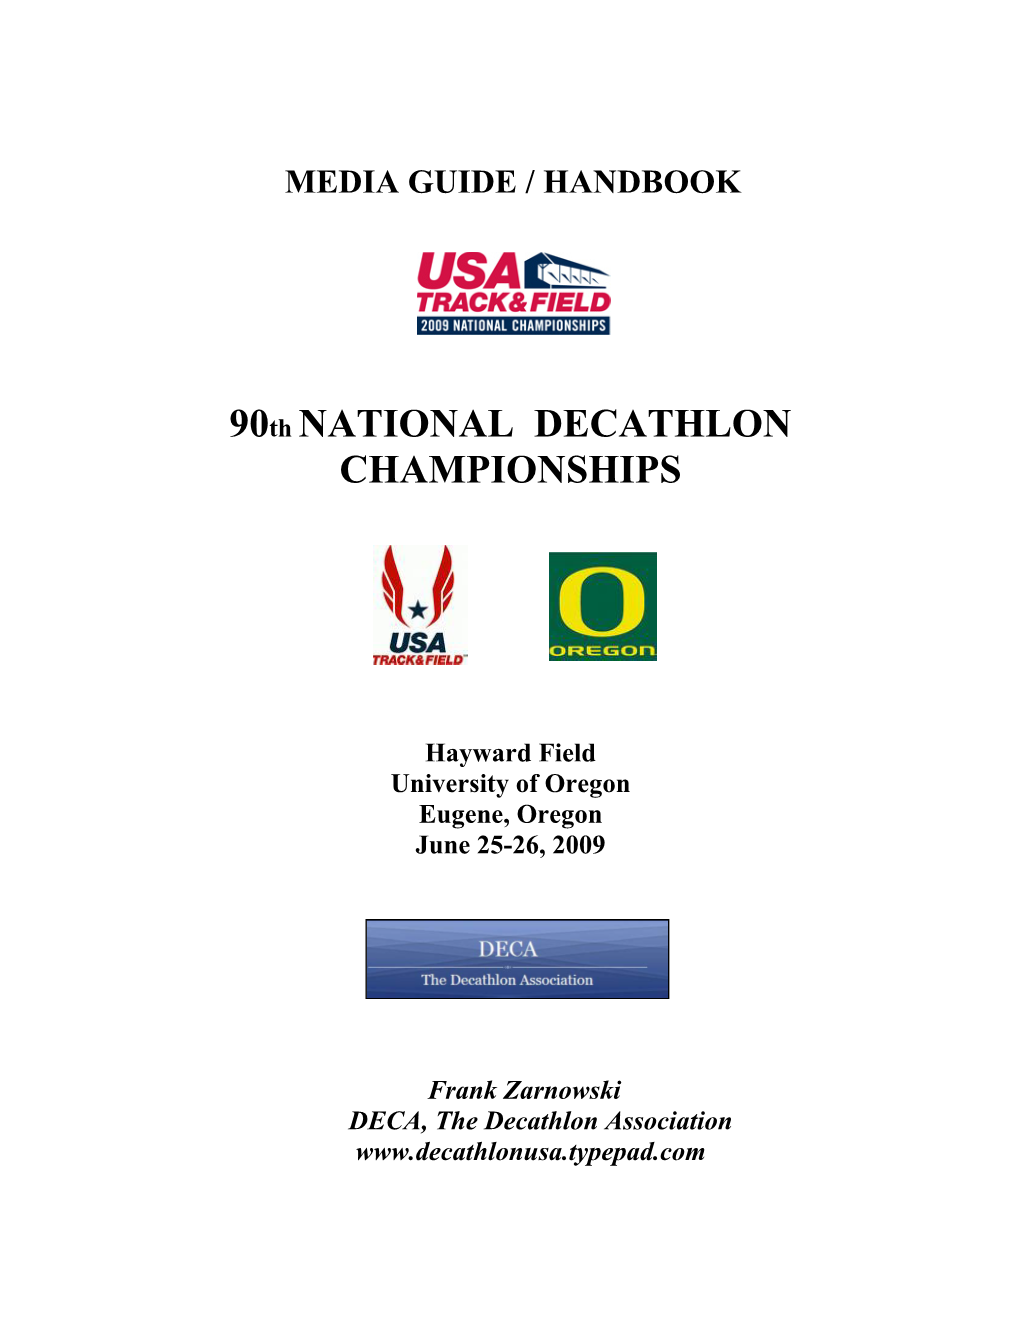 2009 USATF Decathlon Media Guide